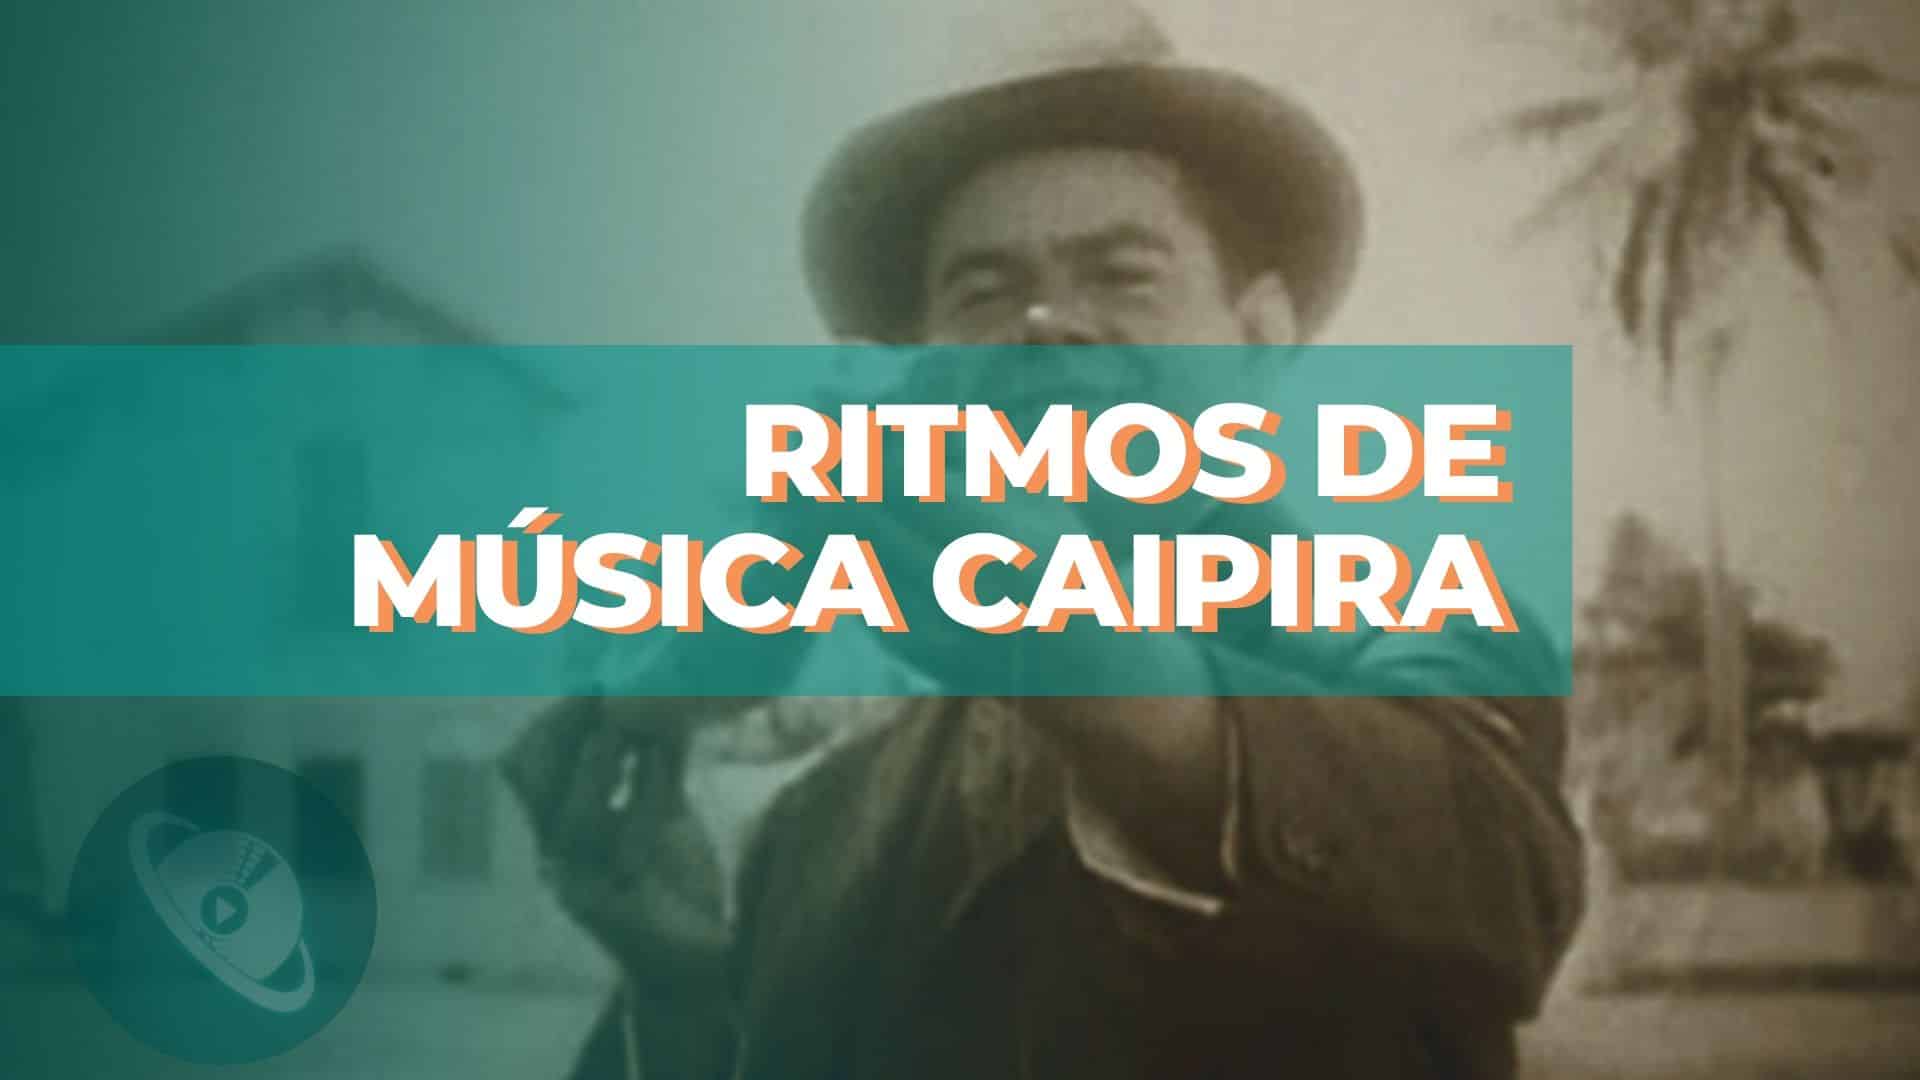 Ritmos de música caipira: tradicional ou comercial?